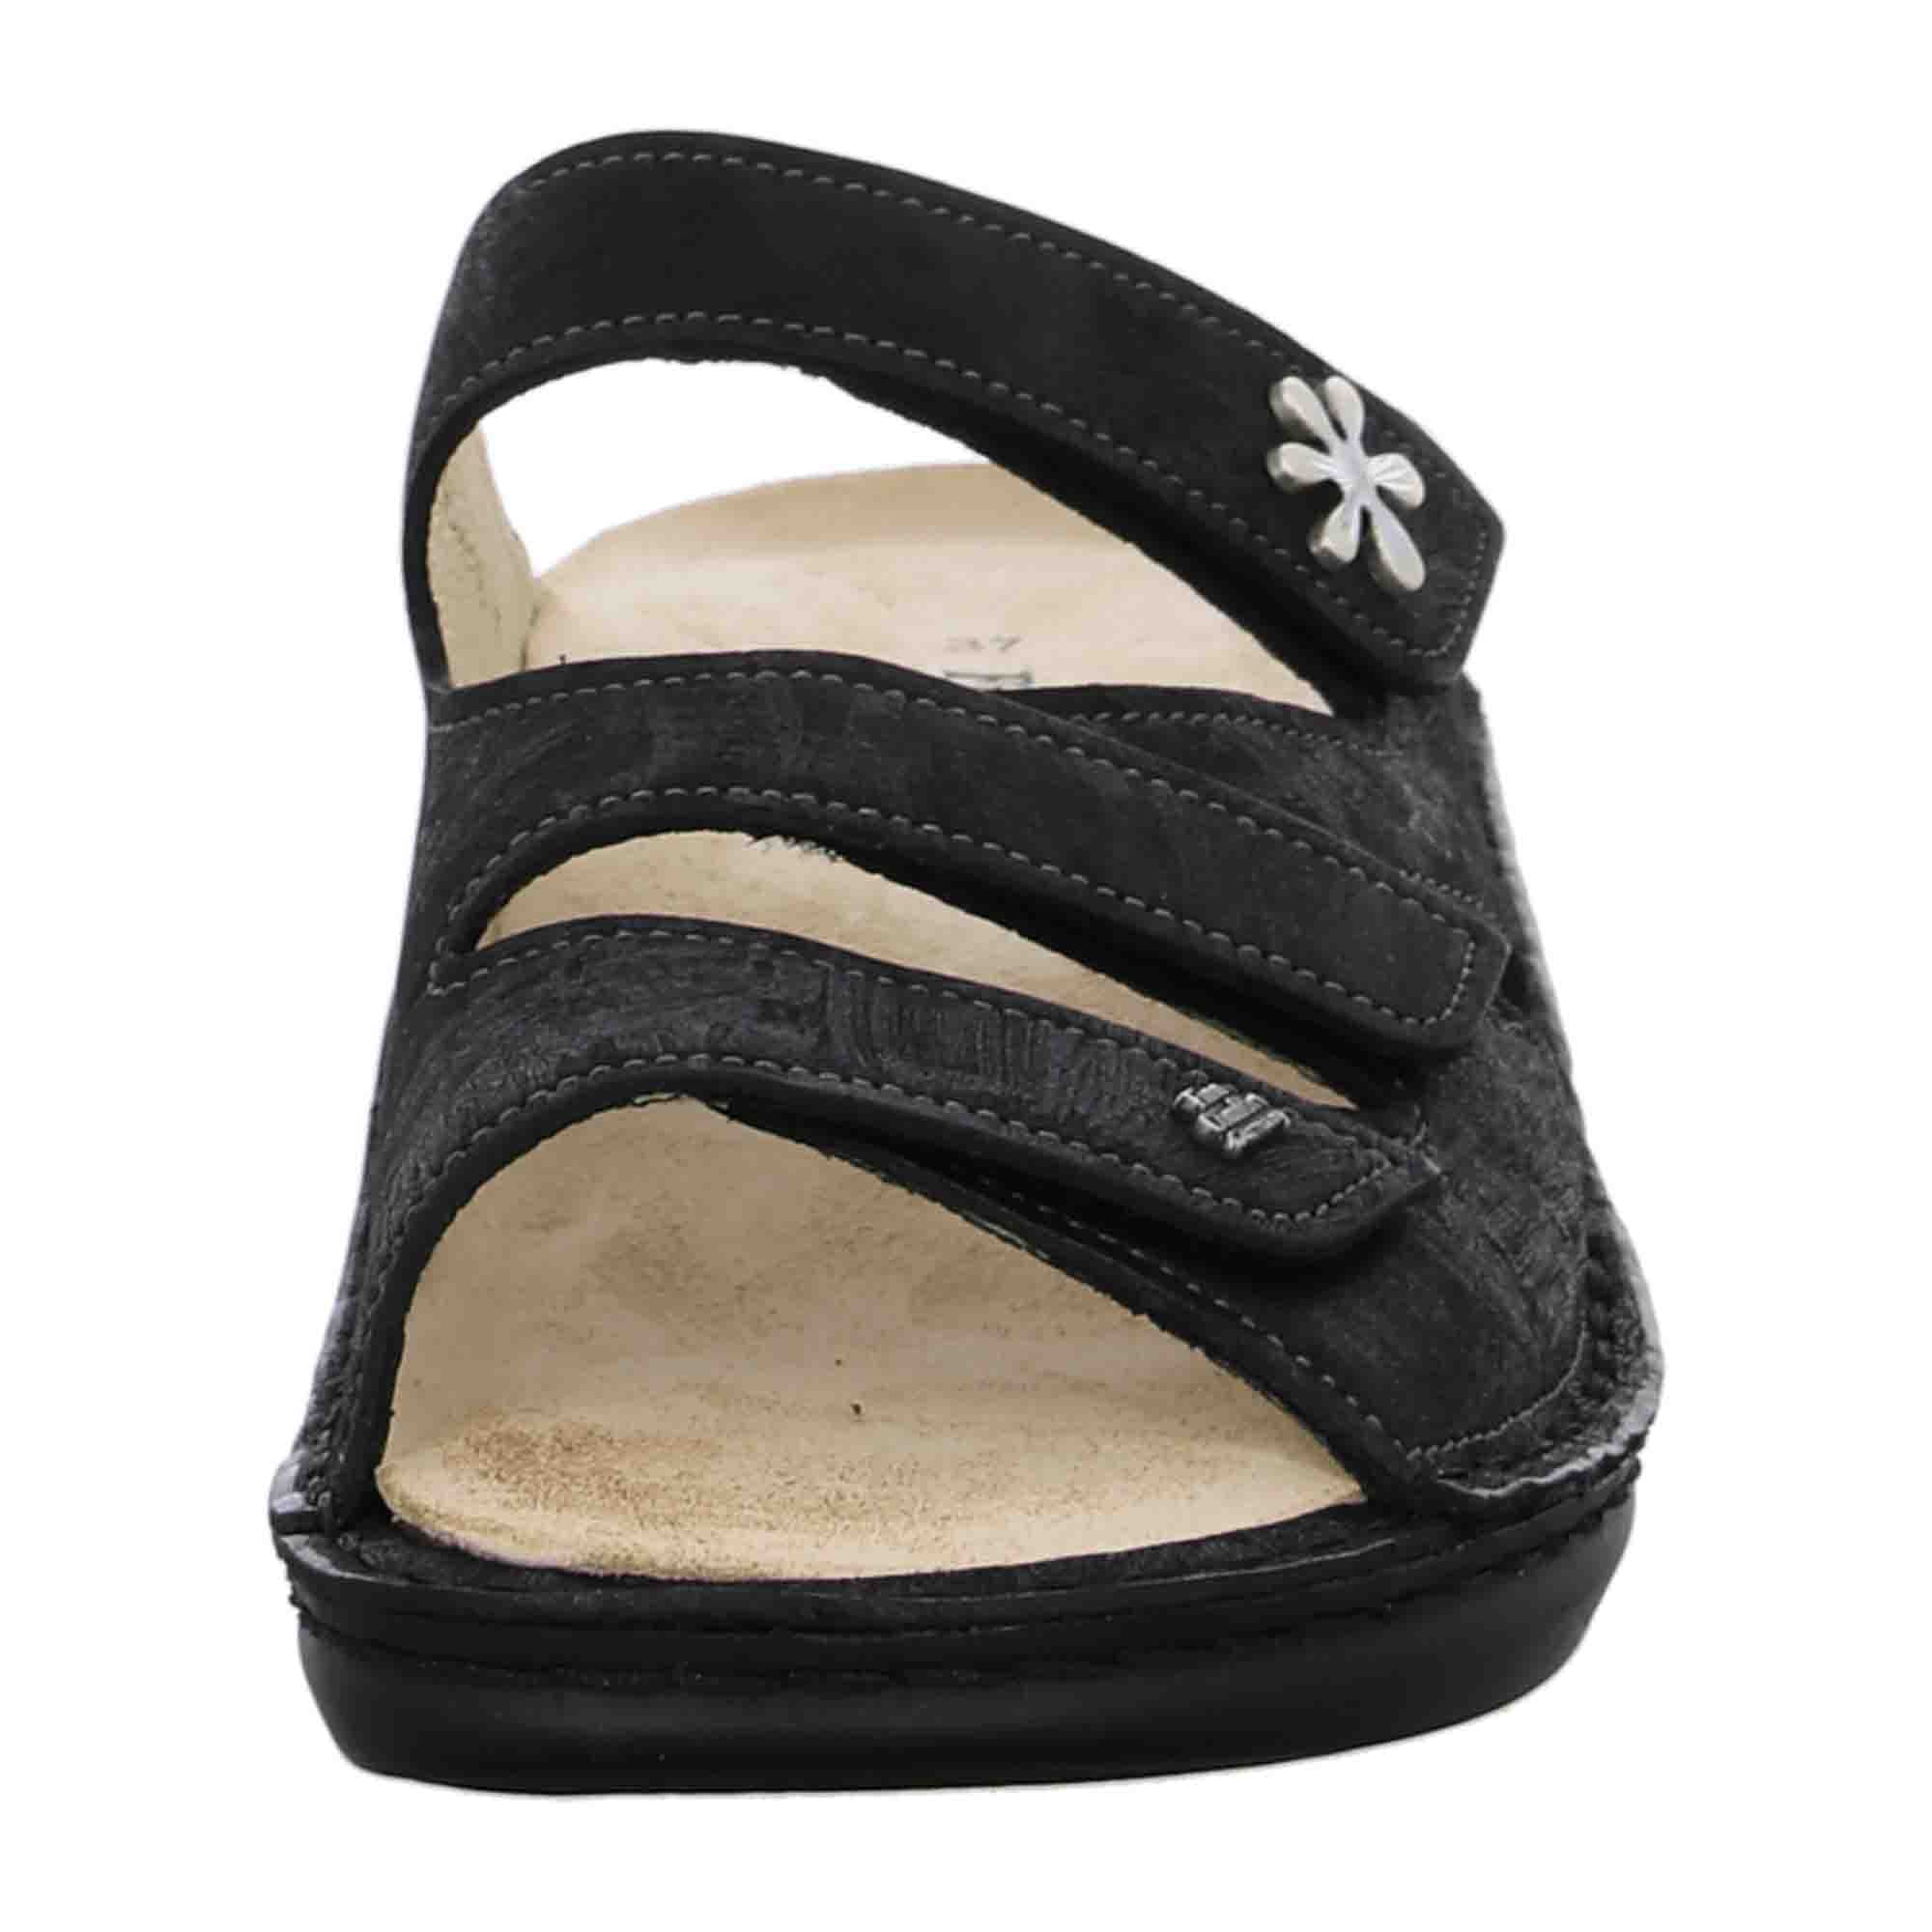 Finn Comfort Grenada Women's Comfort Sandals - Stylish Black Leather